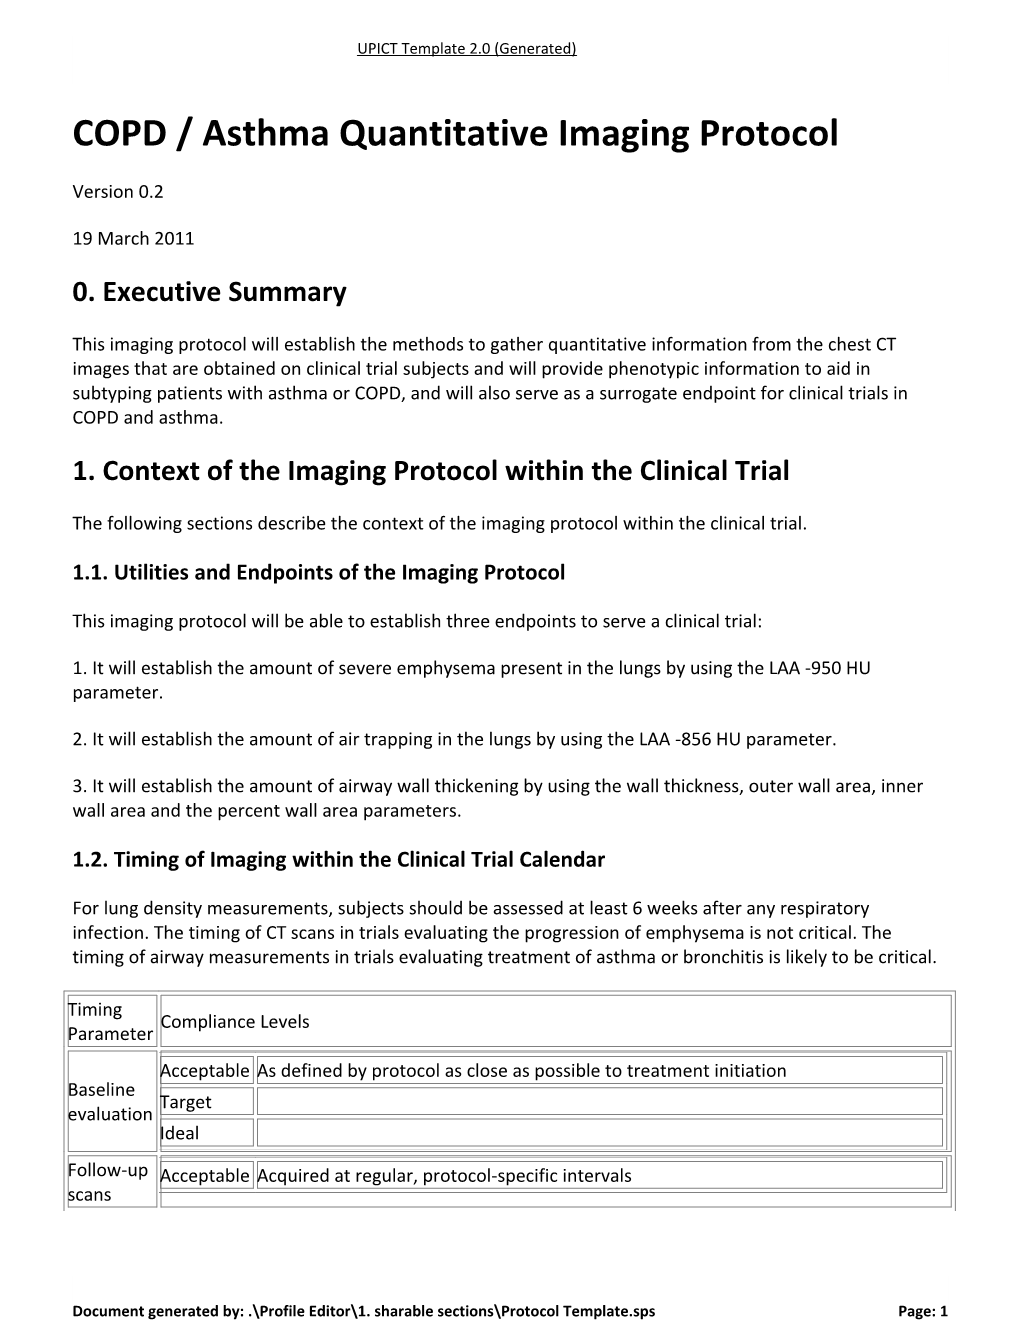 COPD / Asthma Quantitative Imaging Protocol